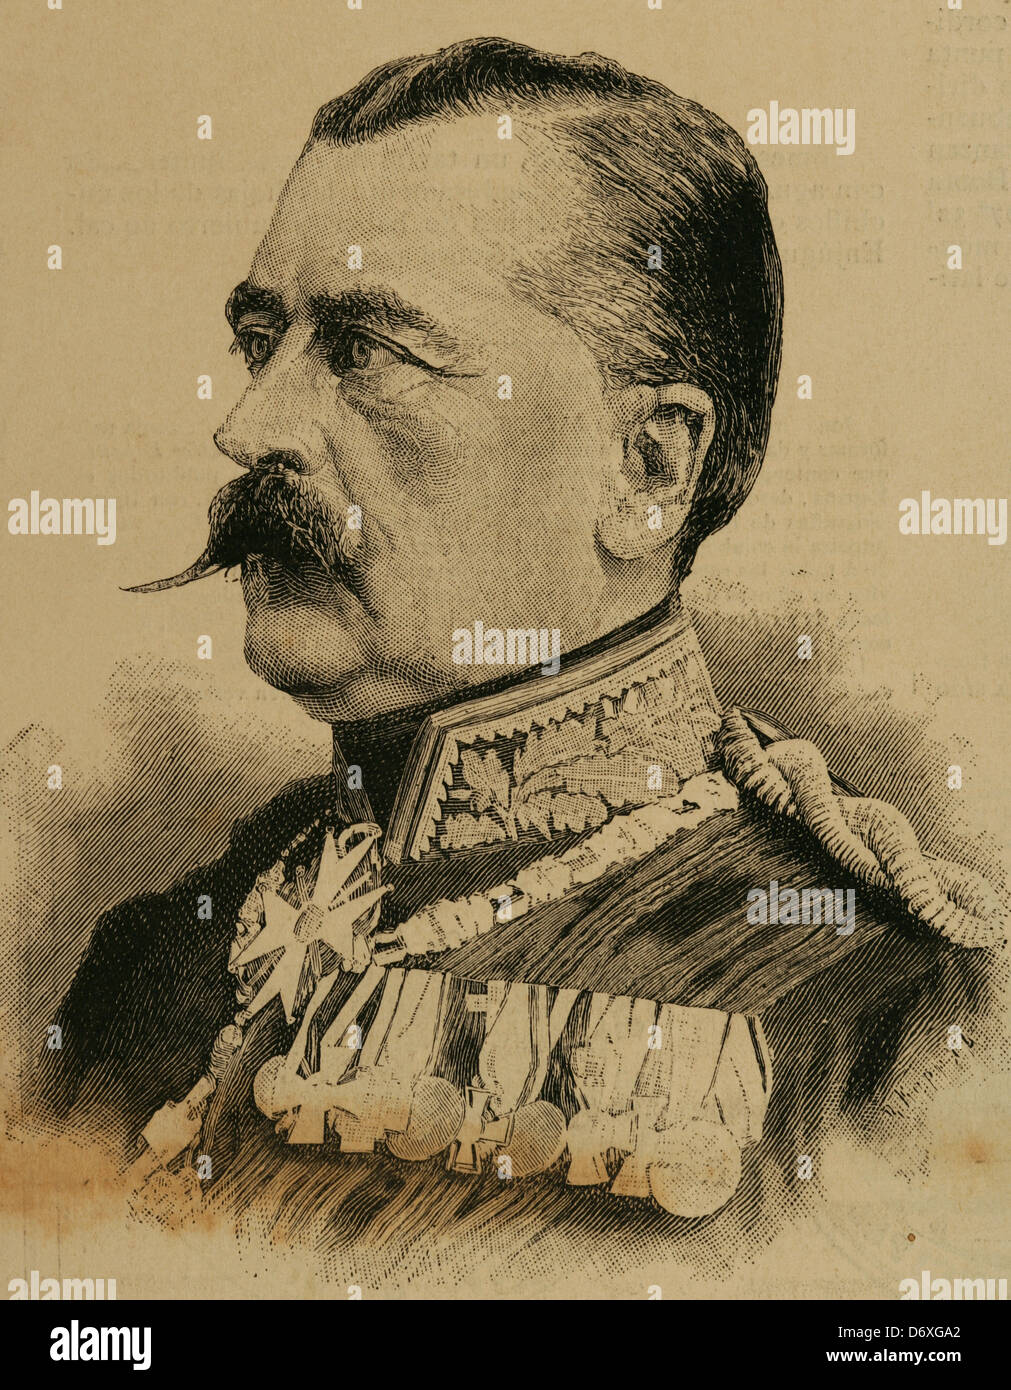 Prince Charles Anthony of Hohenzollern-Sigmaringen (1811-1885). Portrait. Engraving. Stock Photo